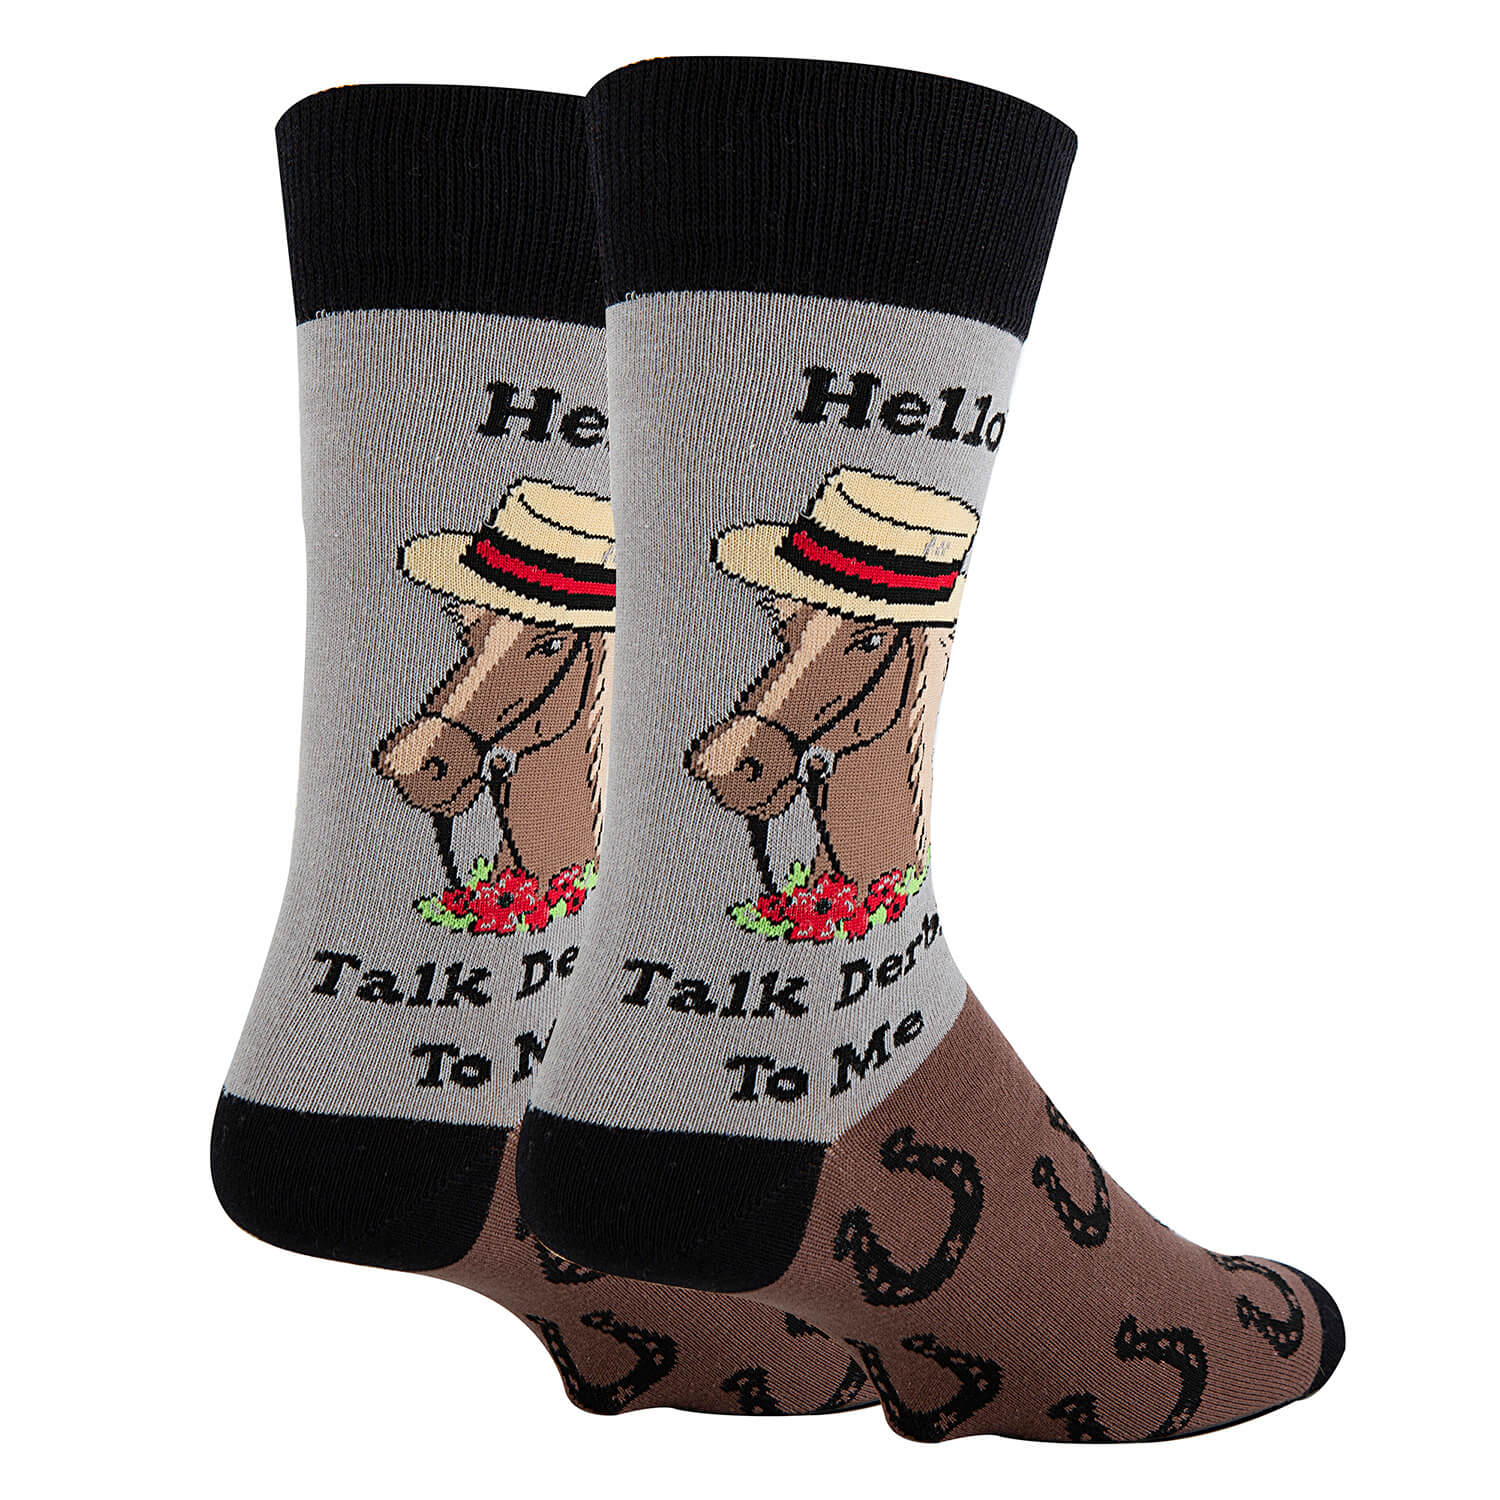 Talk Derby Socks - 0